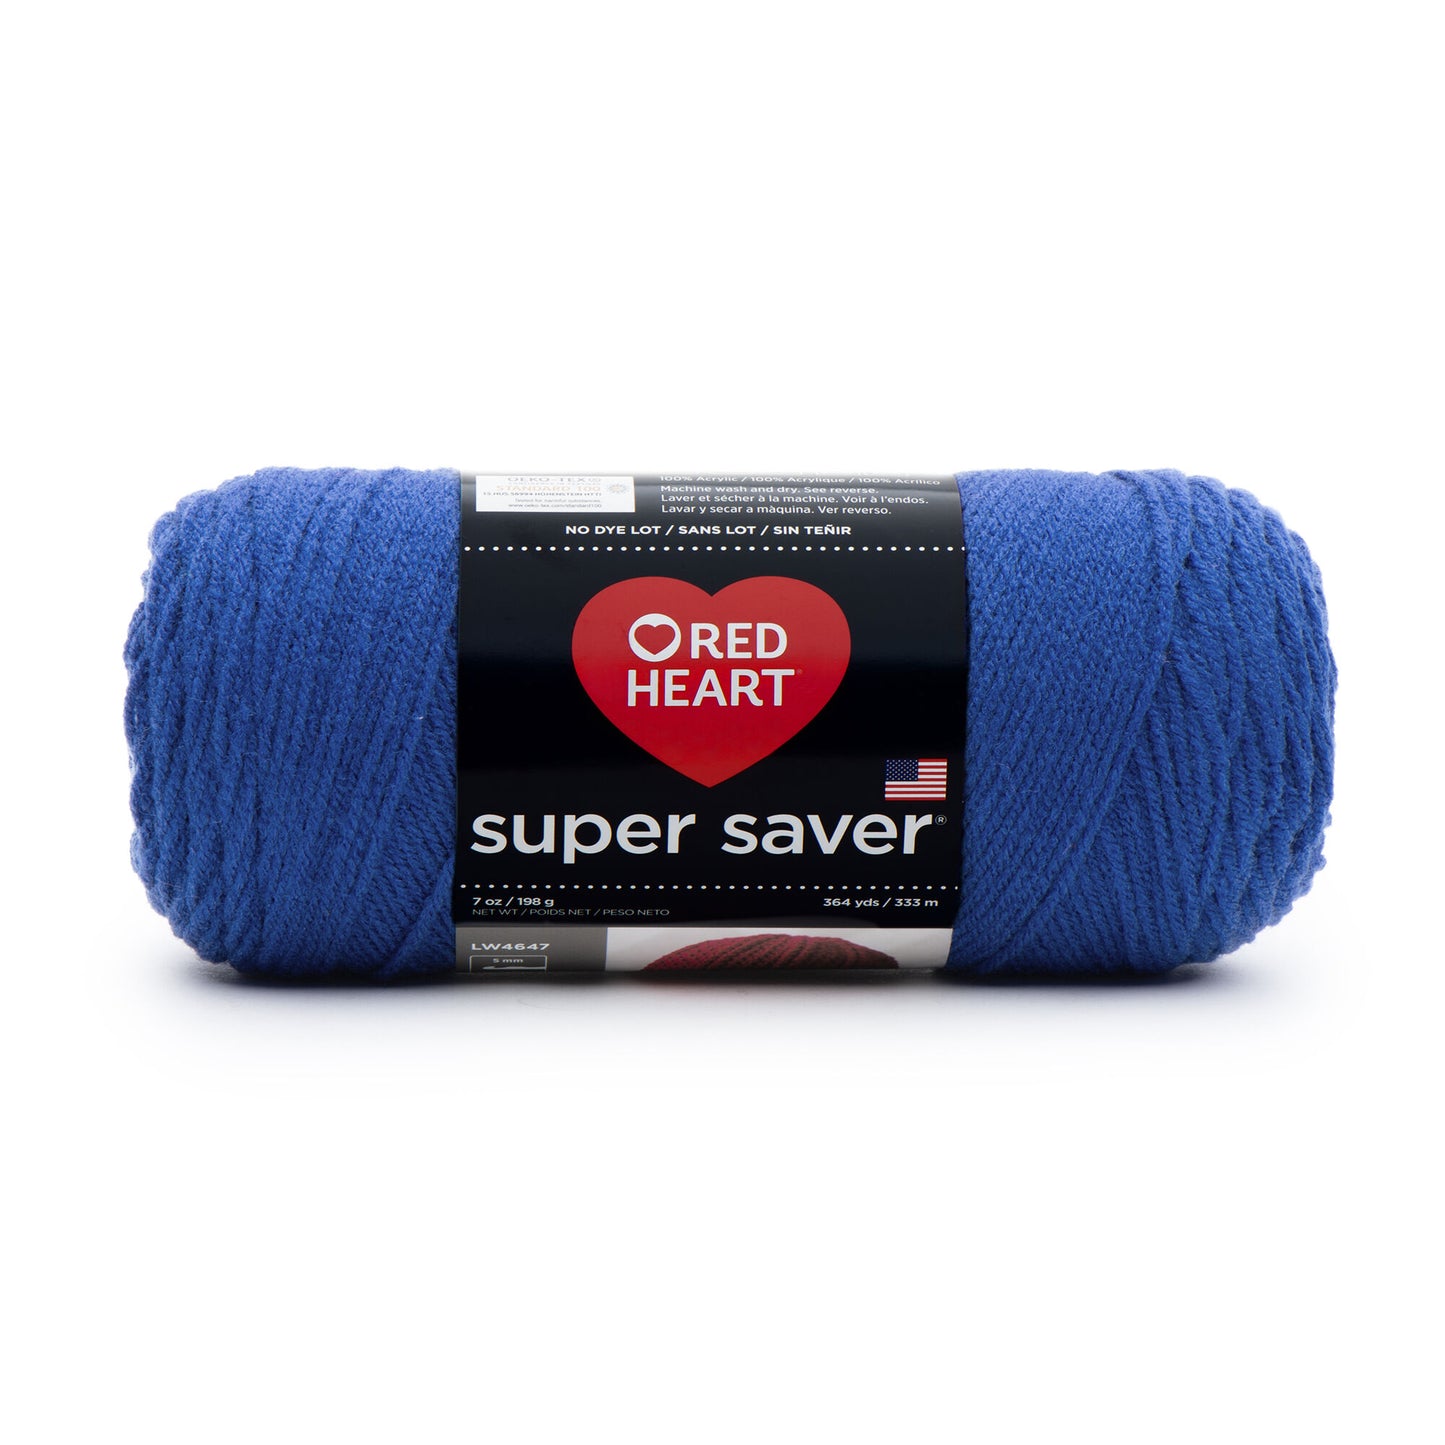 Red Heart Super Saver Yarn Medium Worsted 7 oz